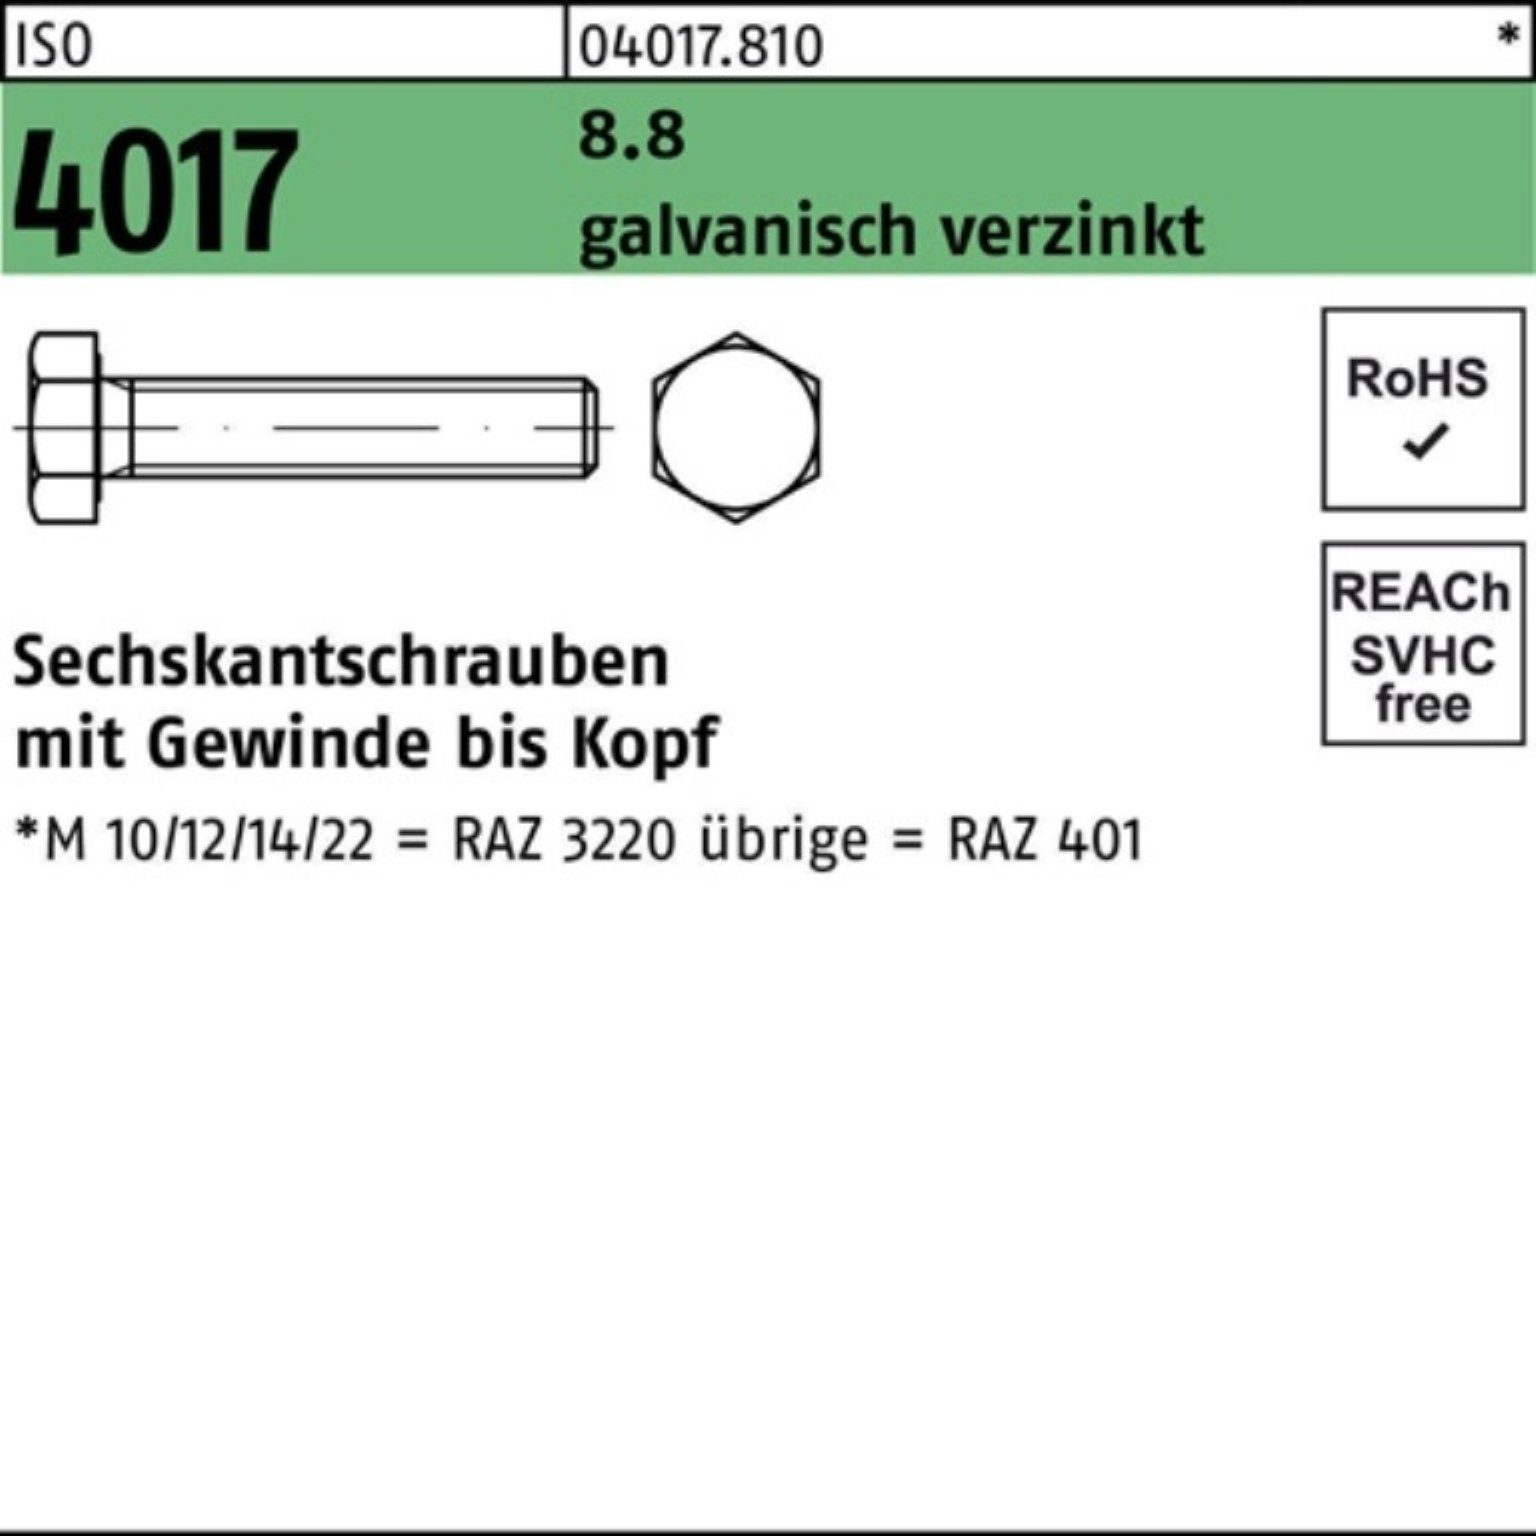 St ISO Bufab 4017 Sechskantschraube M5x 75 200er Sechskantschraube VG galv.verz. 200 8.8 Pack